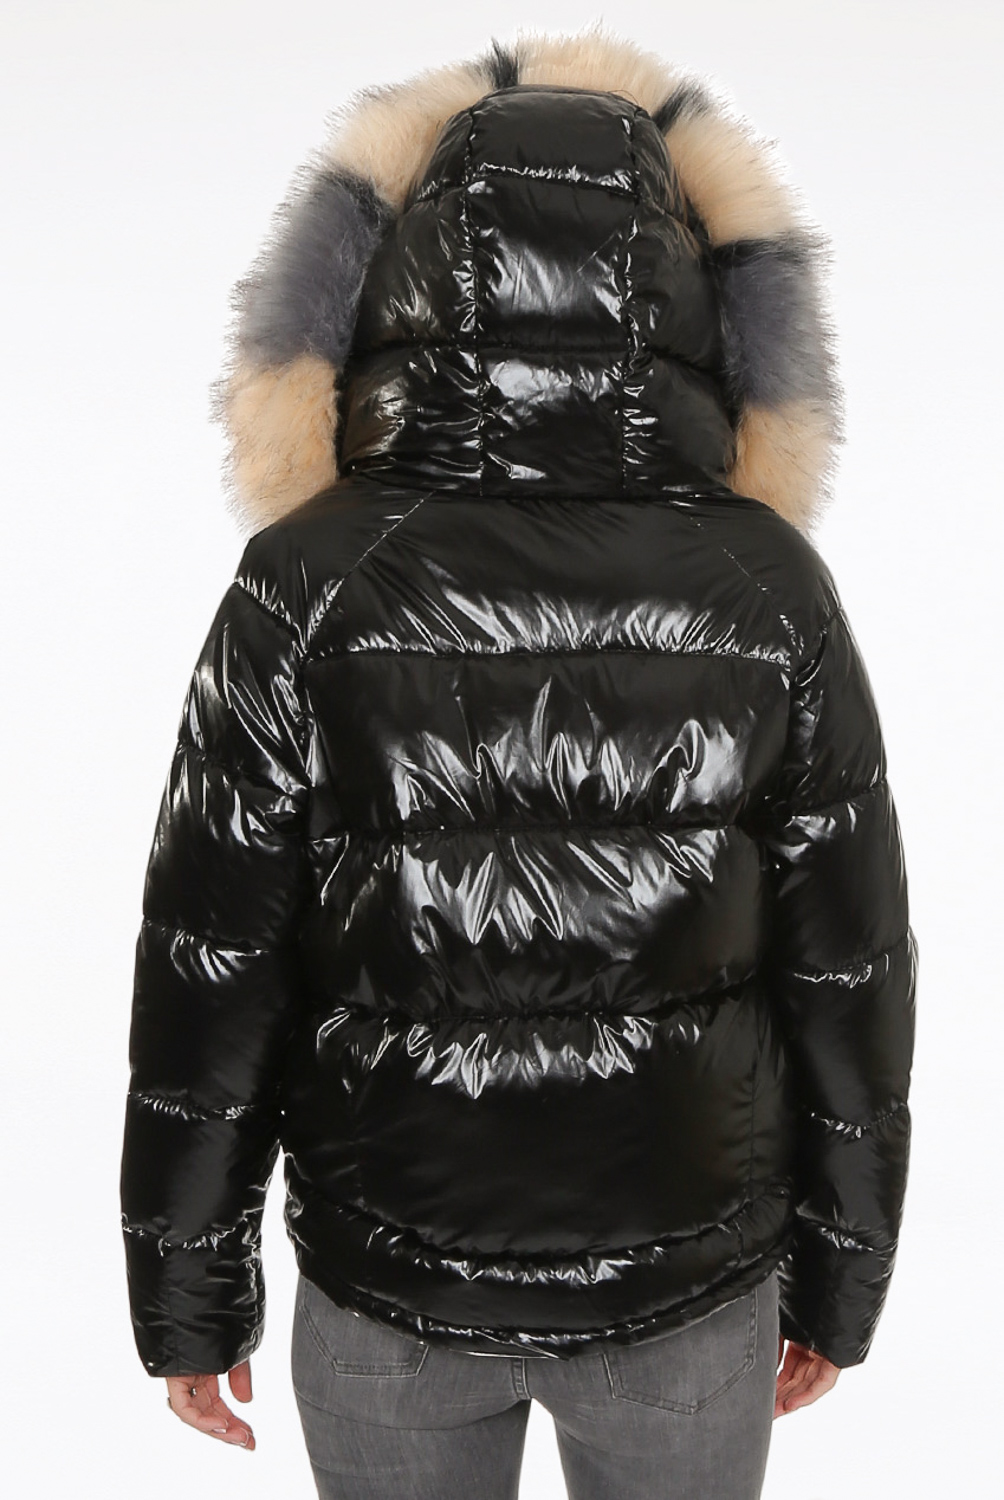 shiny black jacket with fur hood